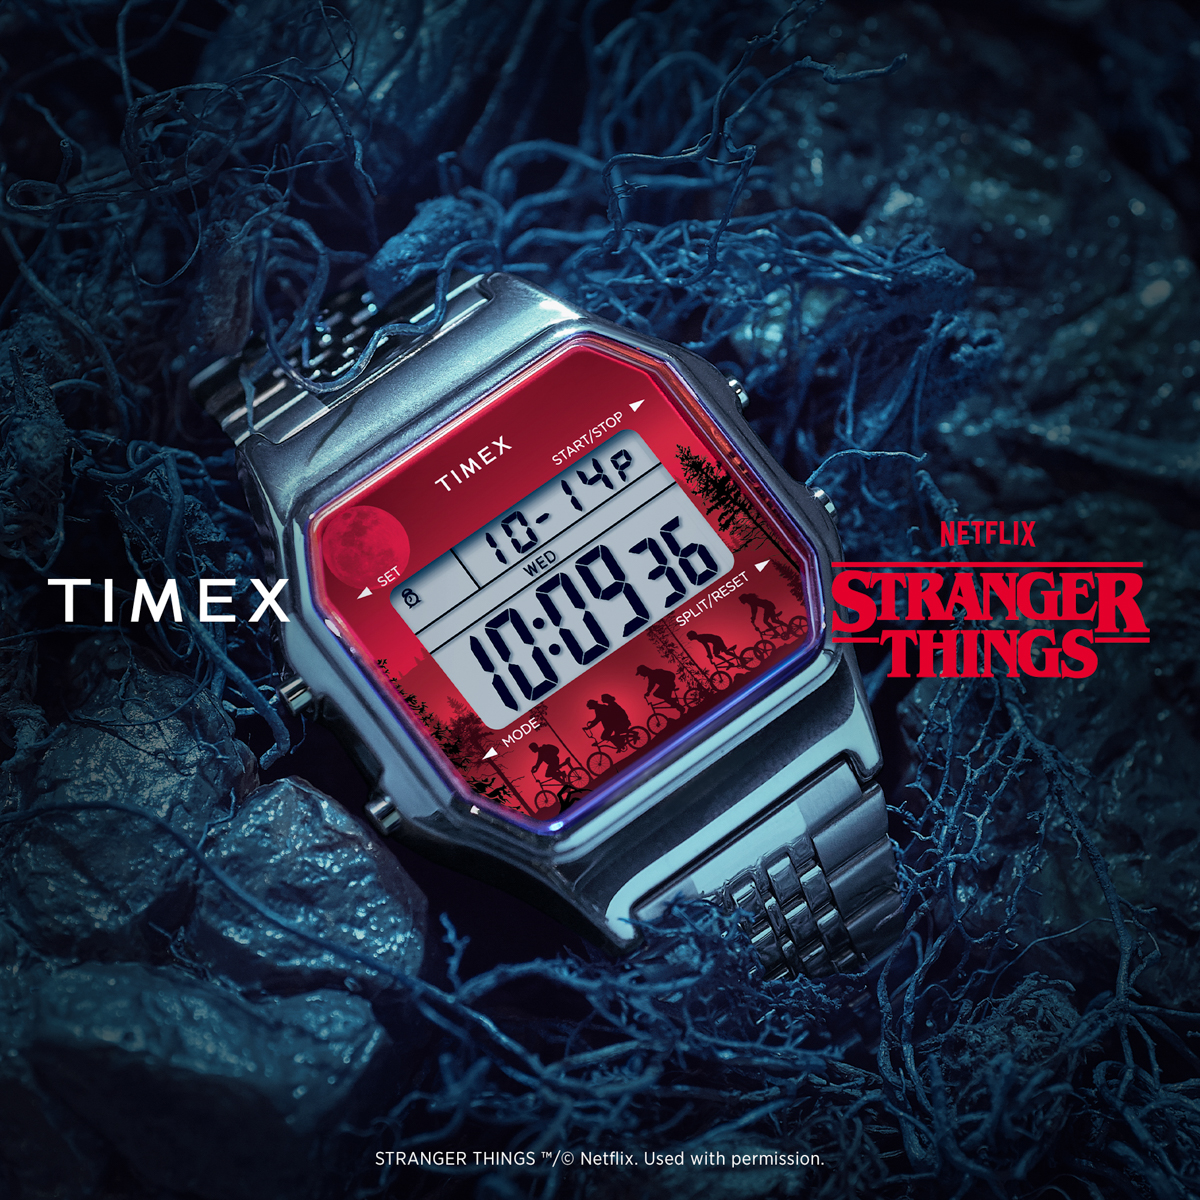 Timex 80 x Stranger Things ストレンジャーシングス